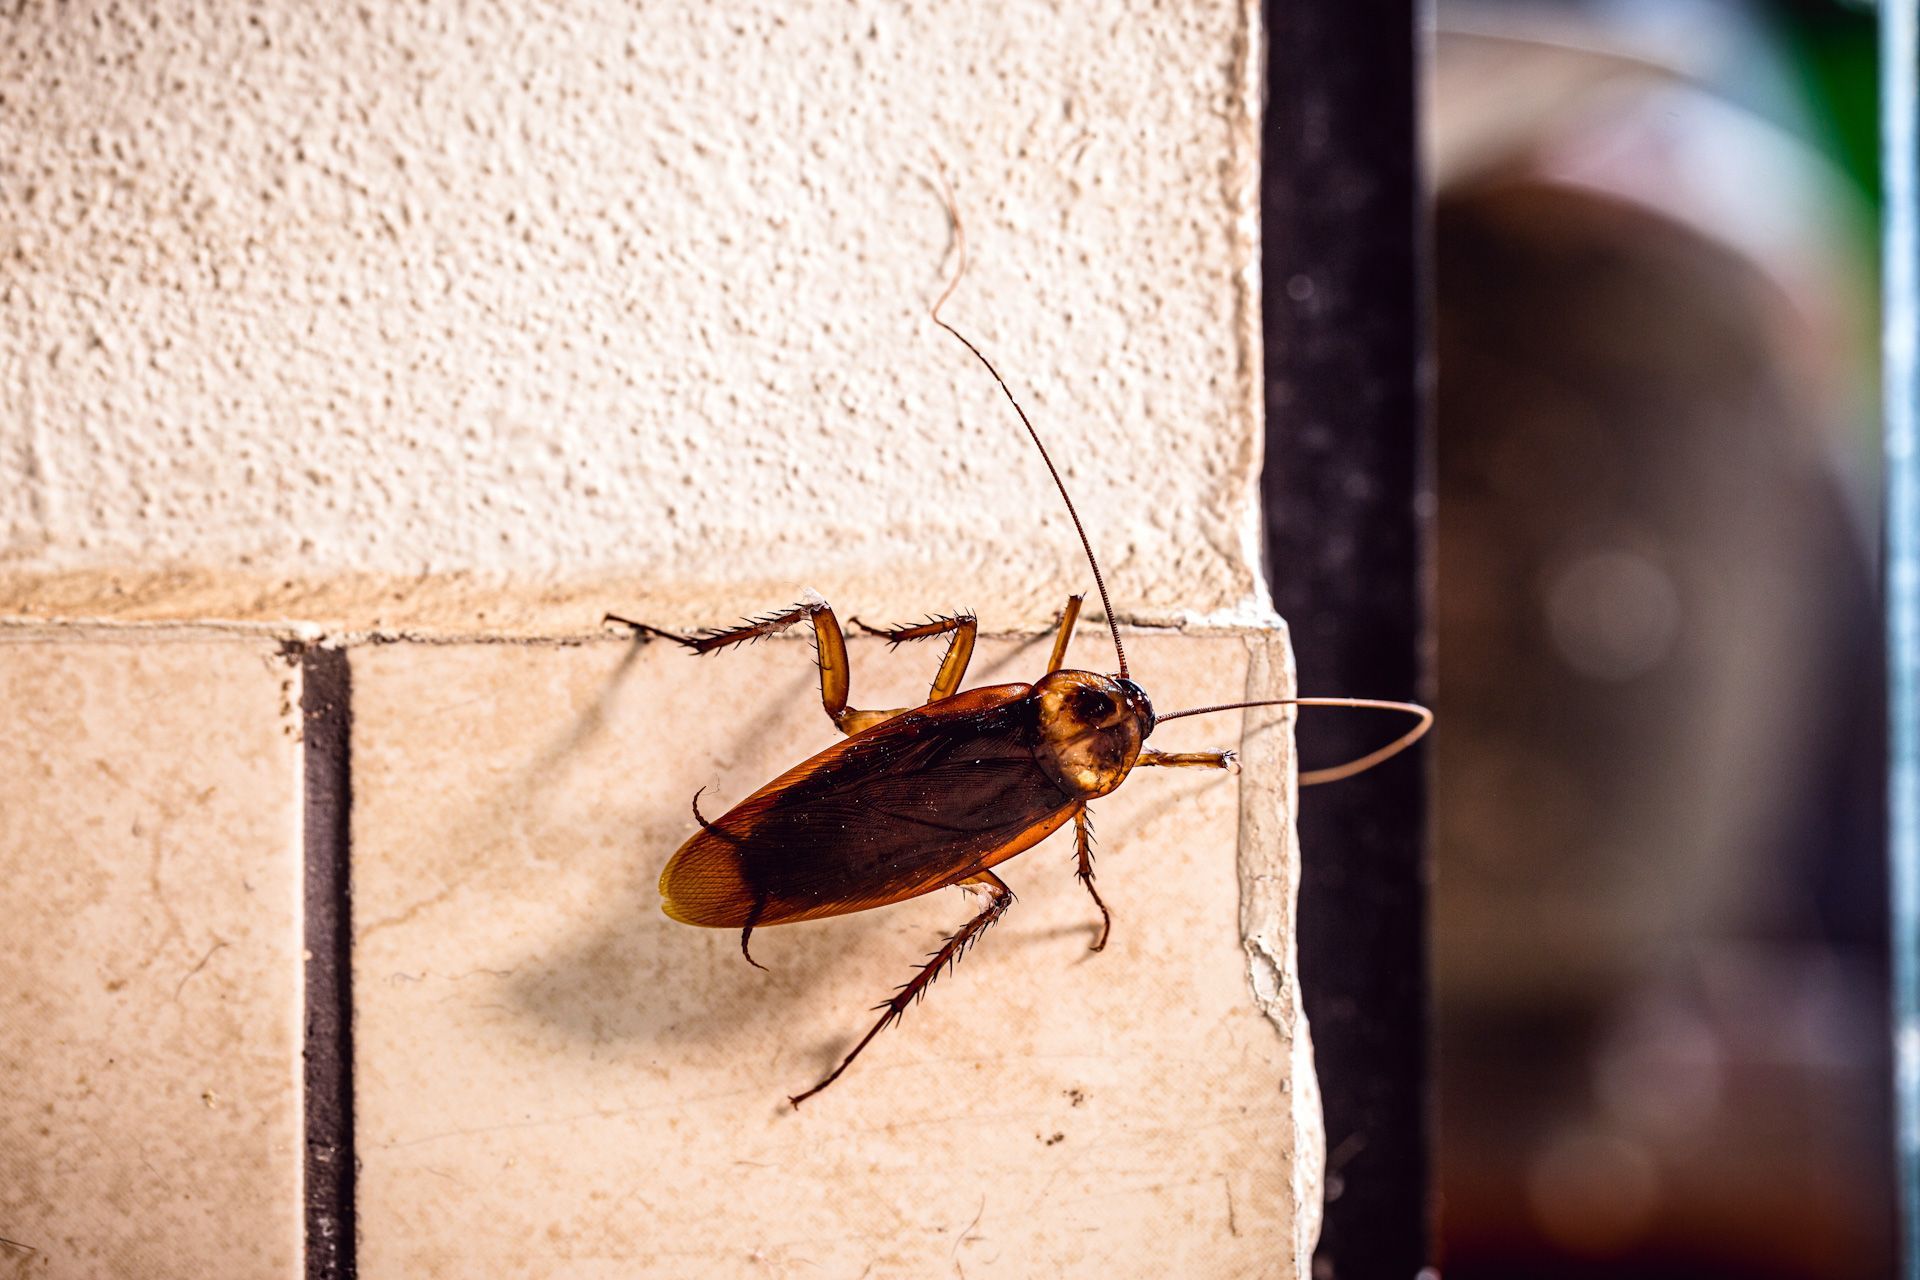 A cockroach on a brick wall